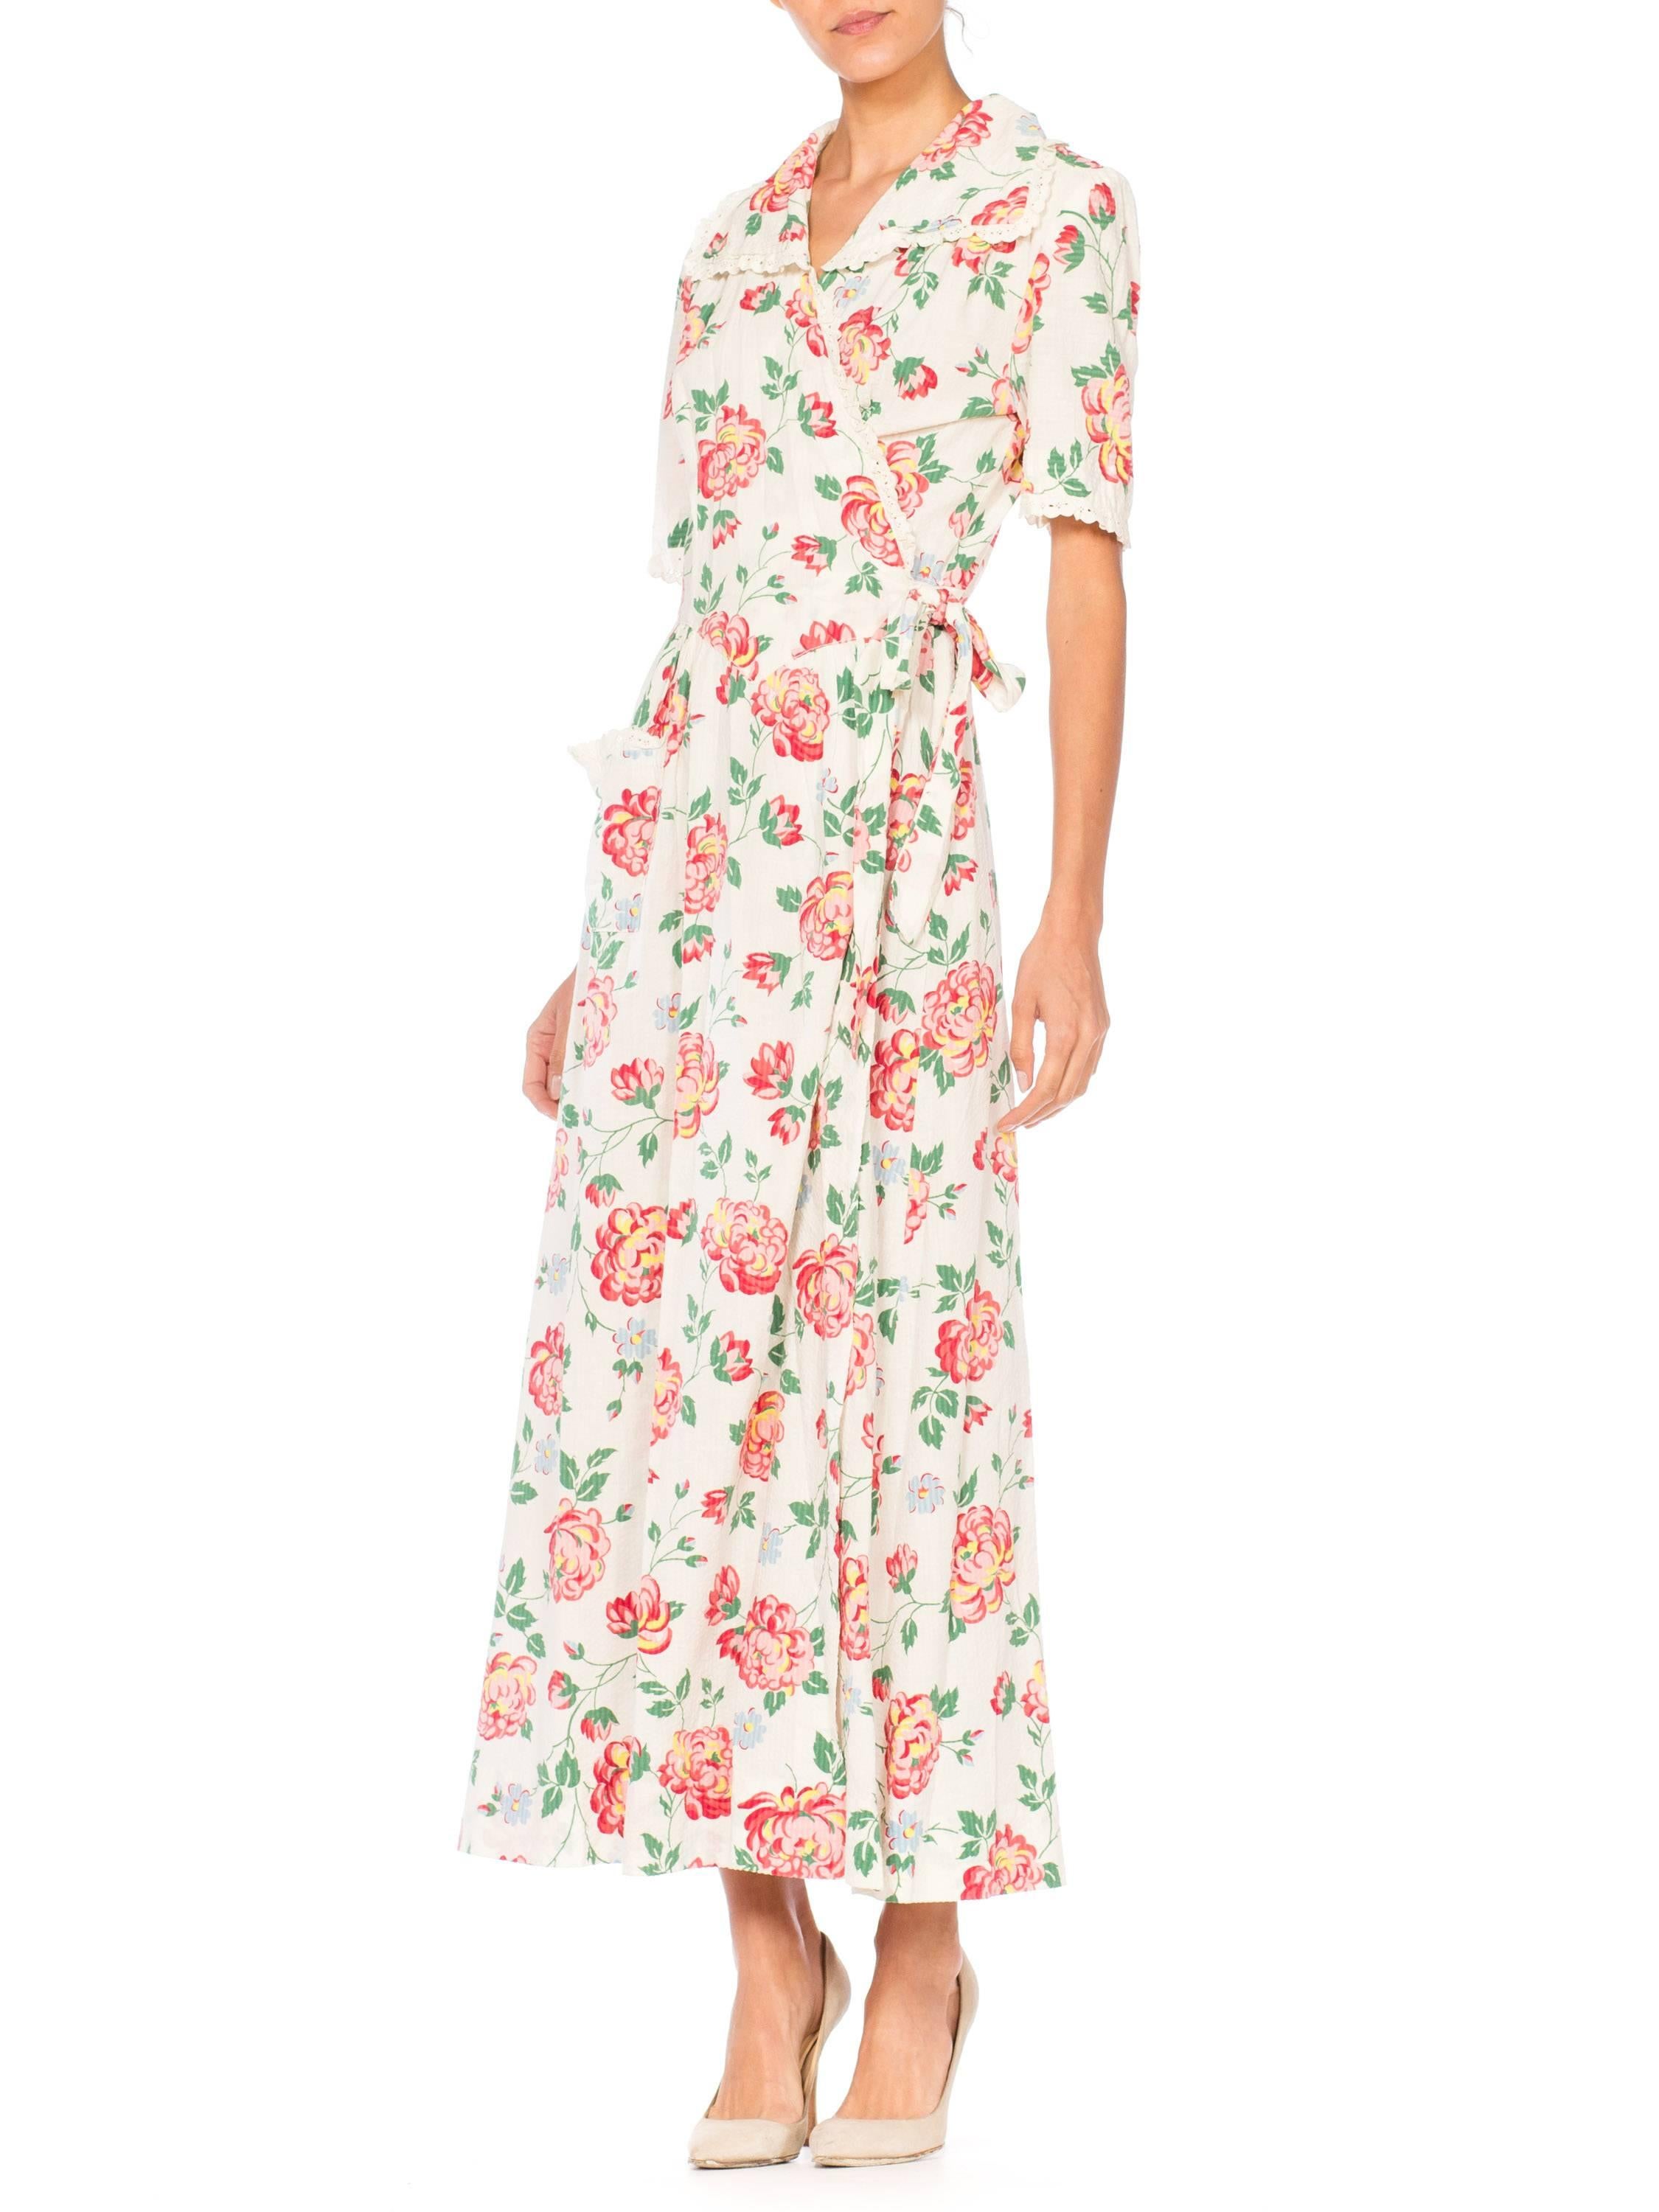 1940s Floral Printed Cotton Dress